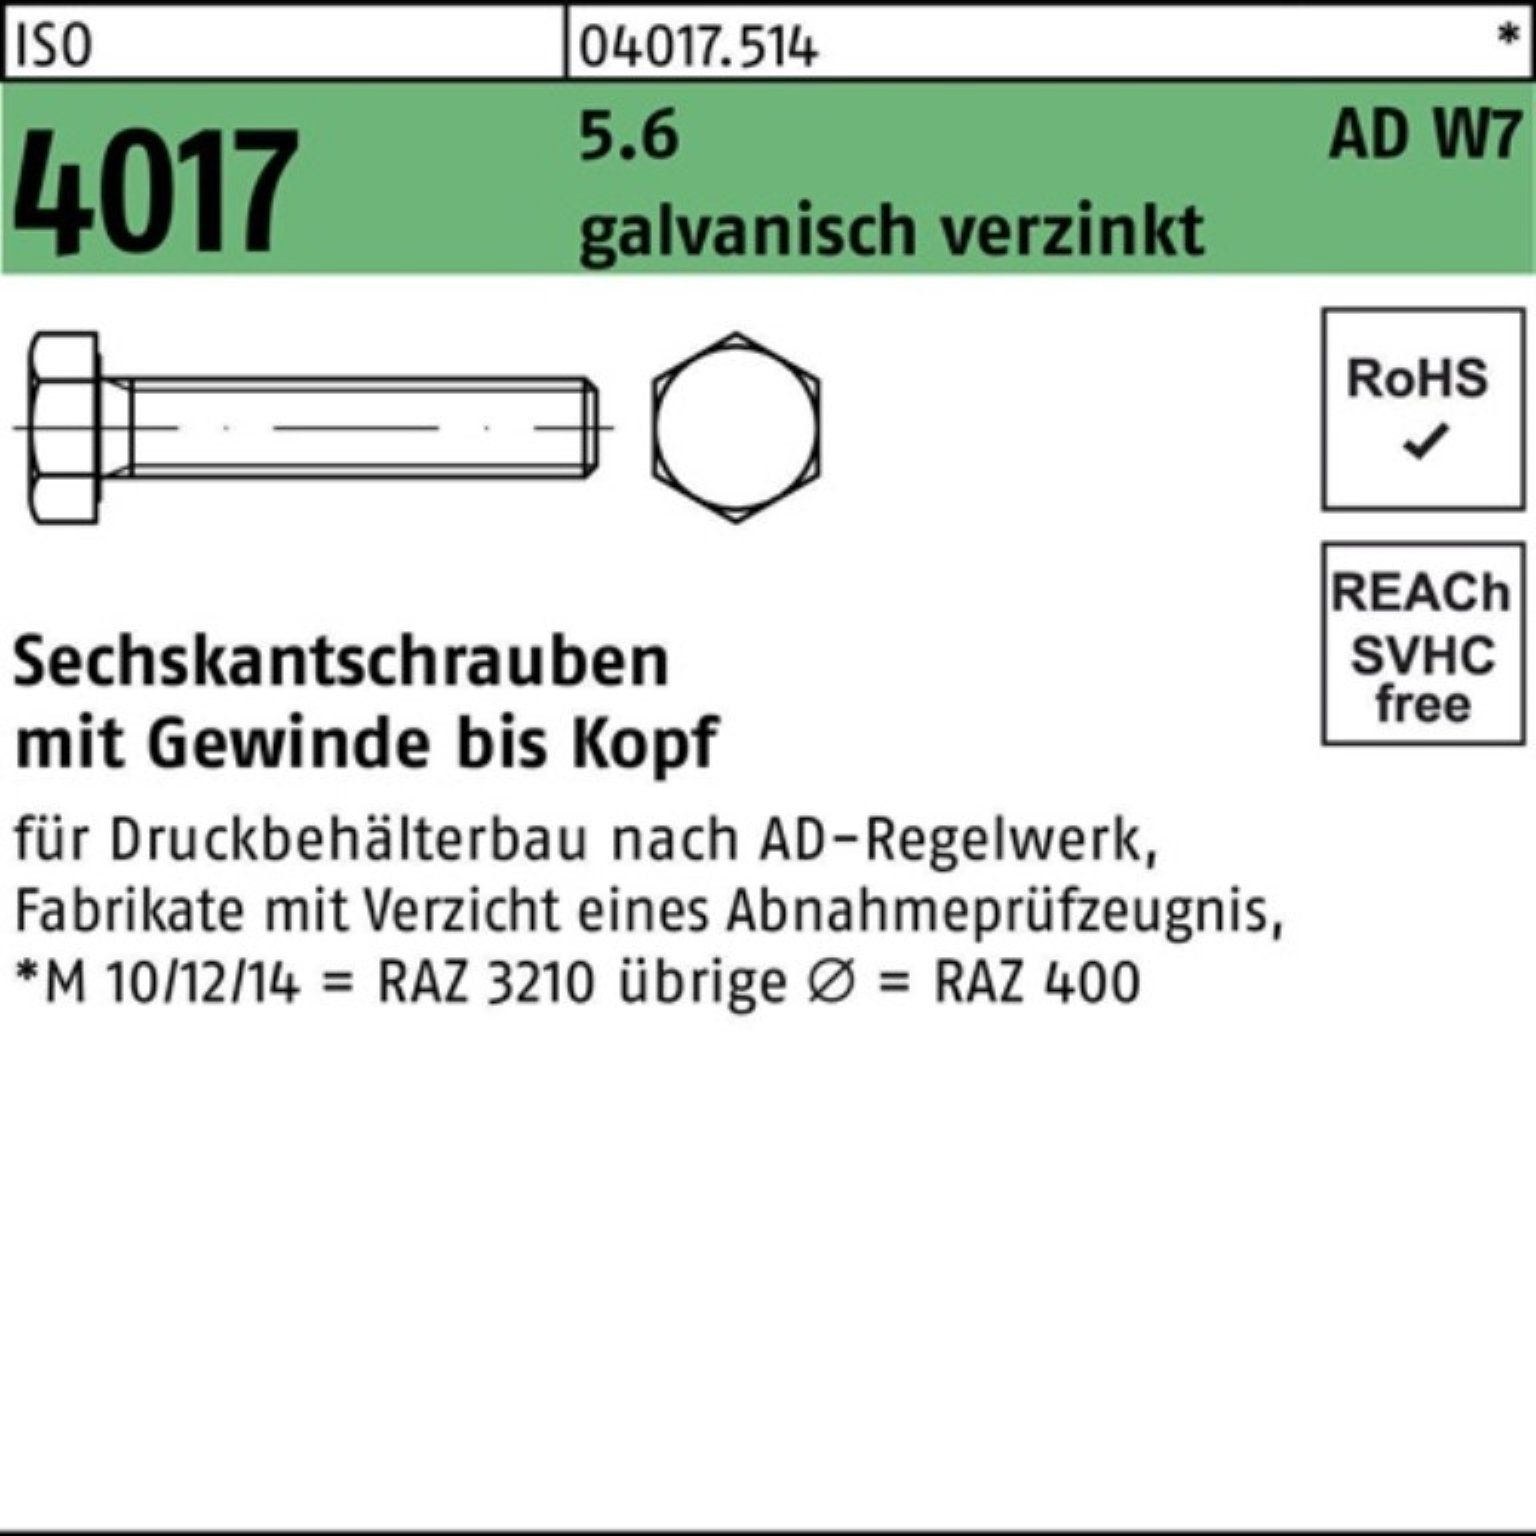 Pack VG 5.6 Sechskantschraube Sechskantschraube galv.verz. 100 W7 4017 AD ISO Bufab M30x 100er